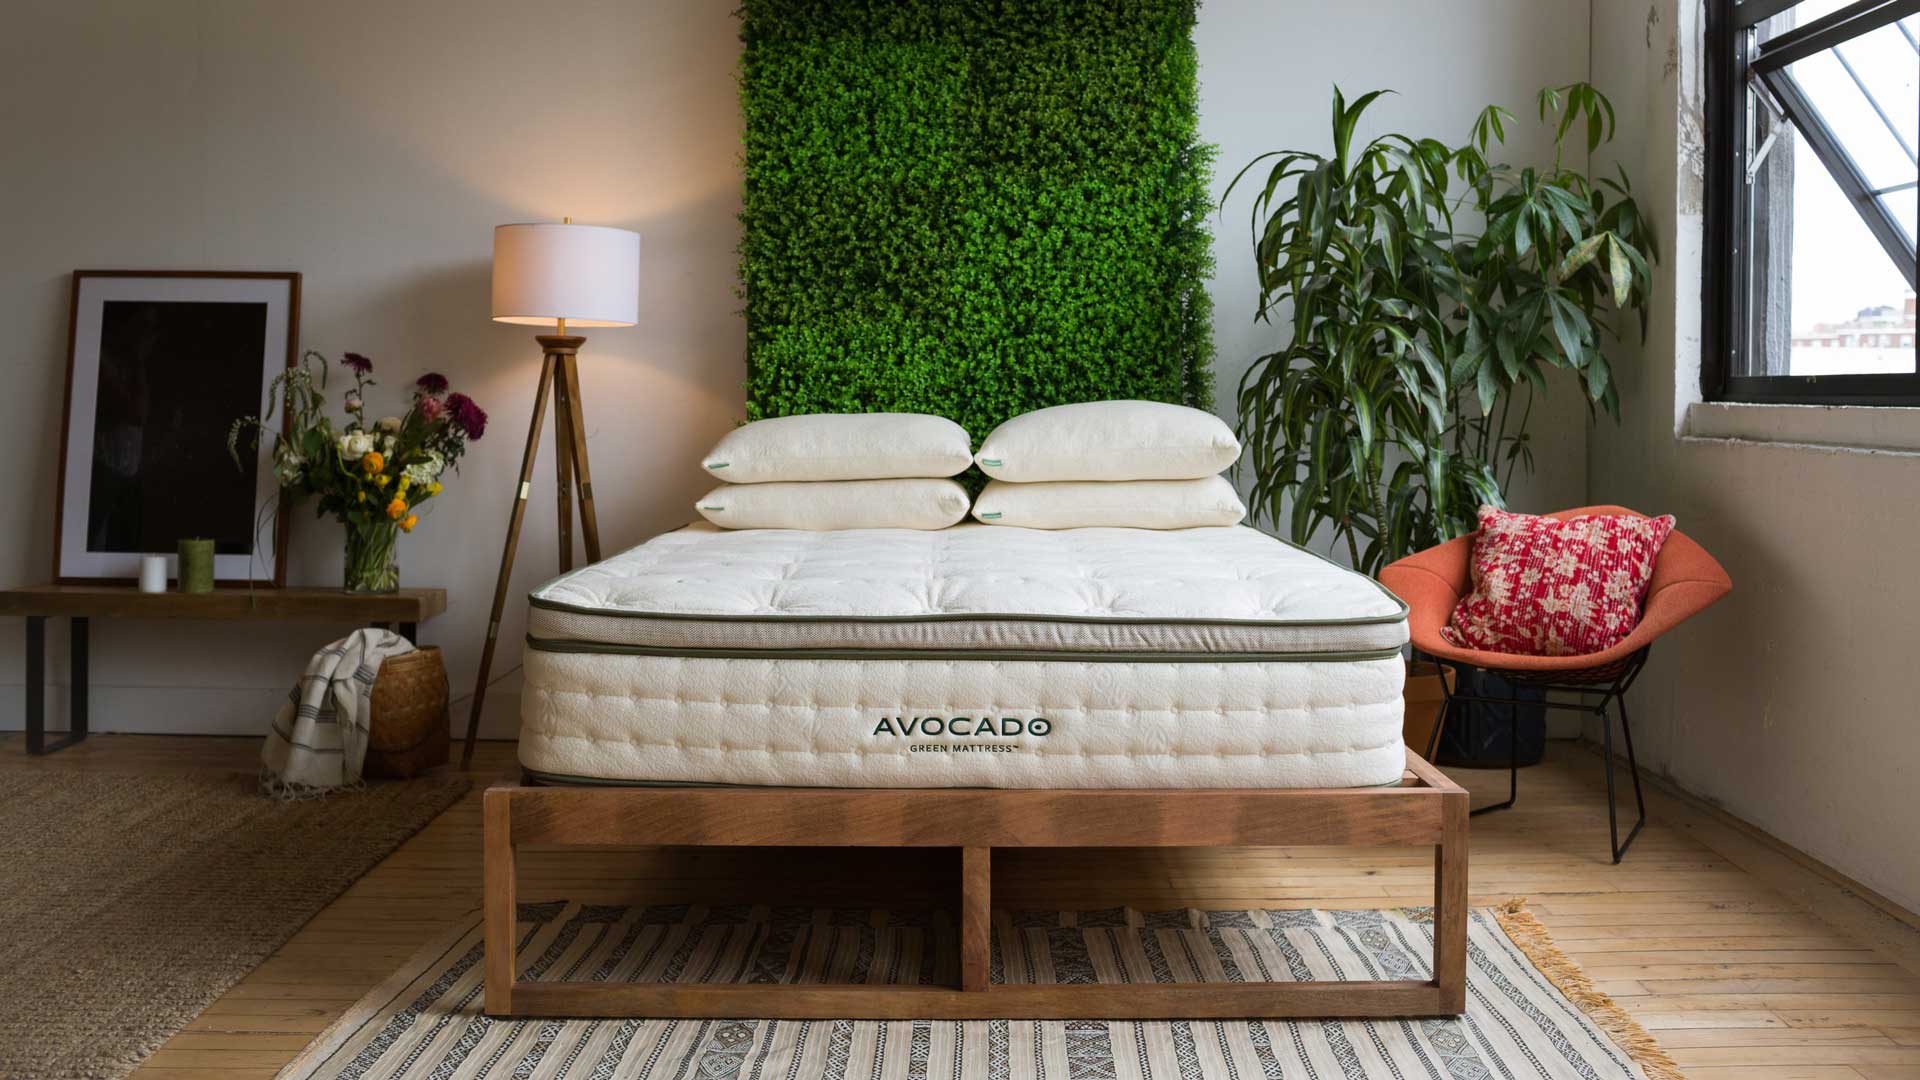 mobile AL avocado mattress